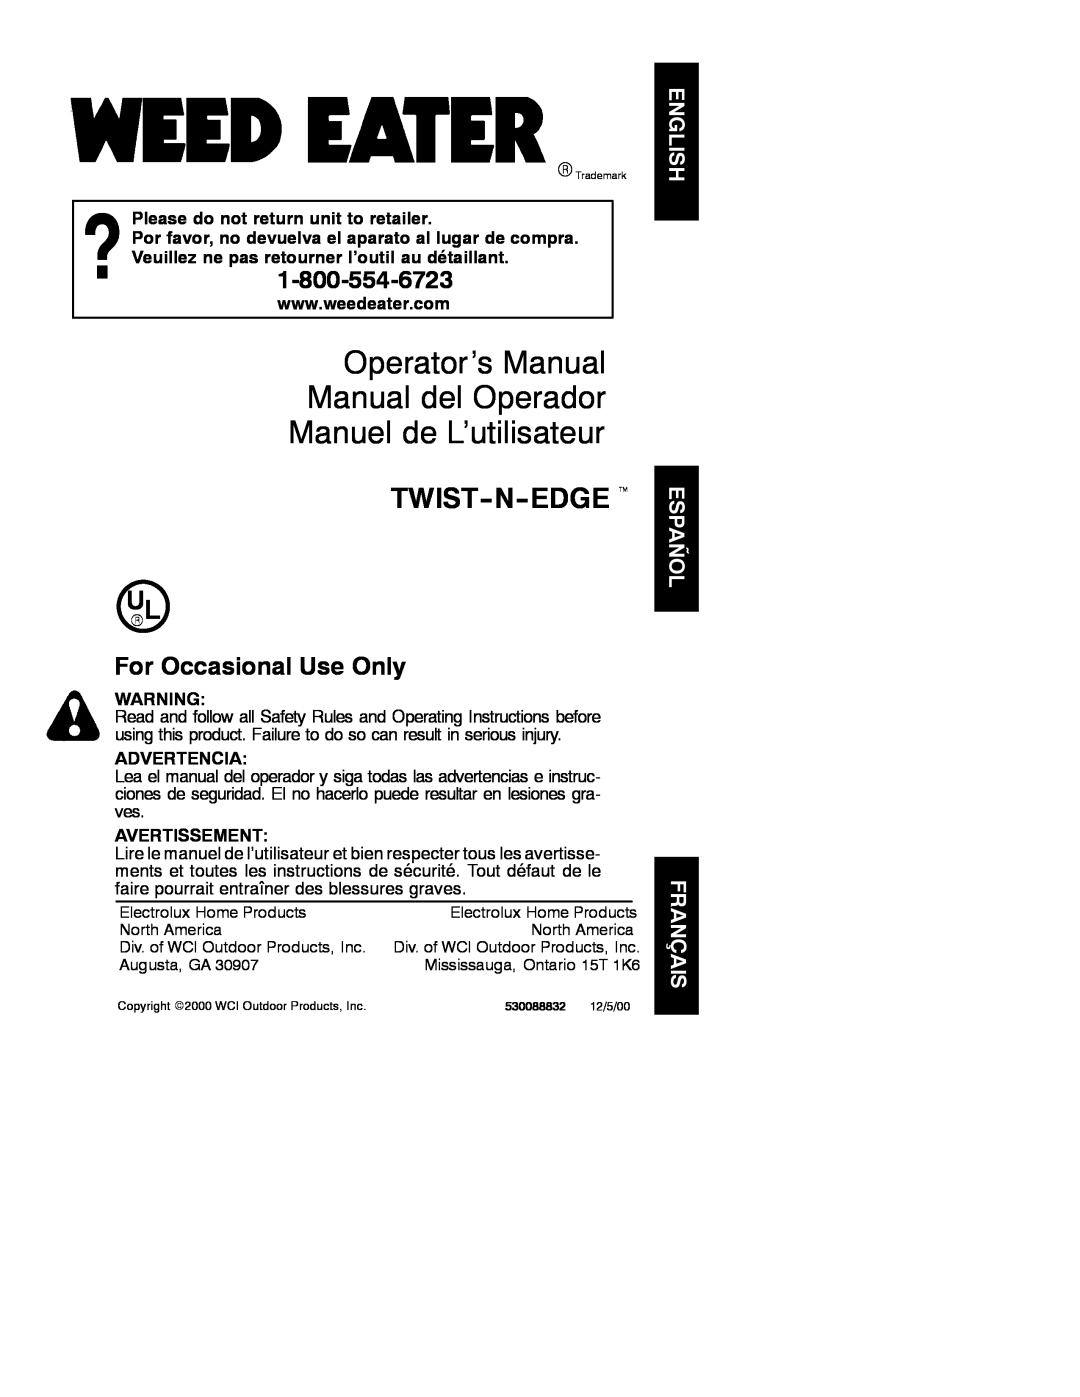 Weed Eater 530088832 manual Operator’s Manual Manual del Operador, Manuel de L’utilisateur, TWIST-N-EDGE t, Advertencia 